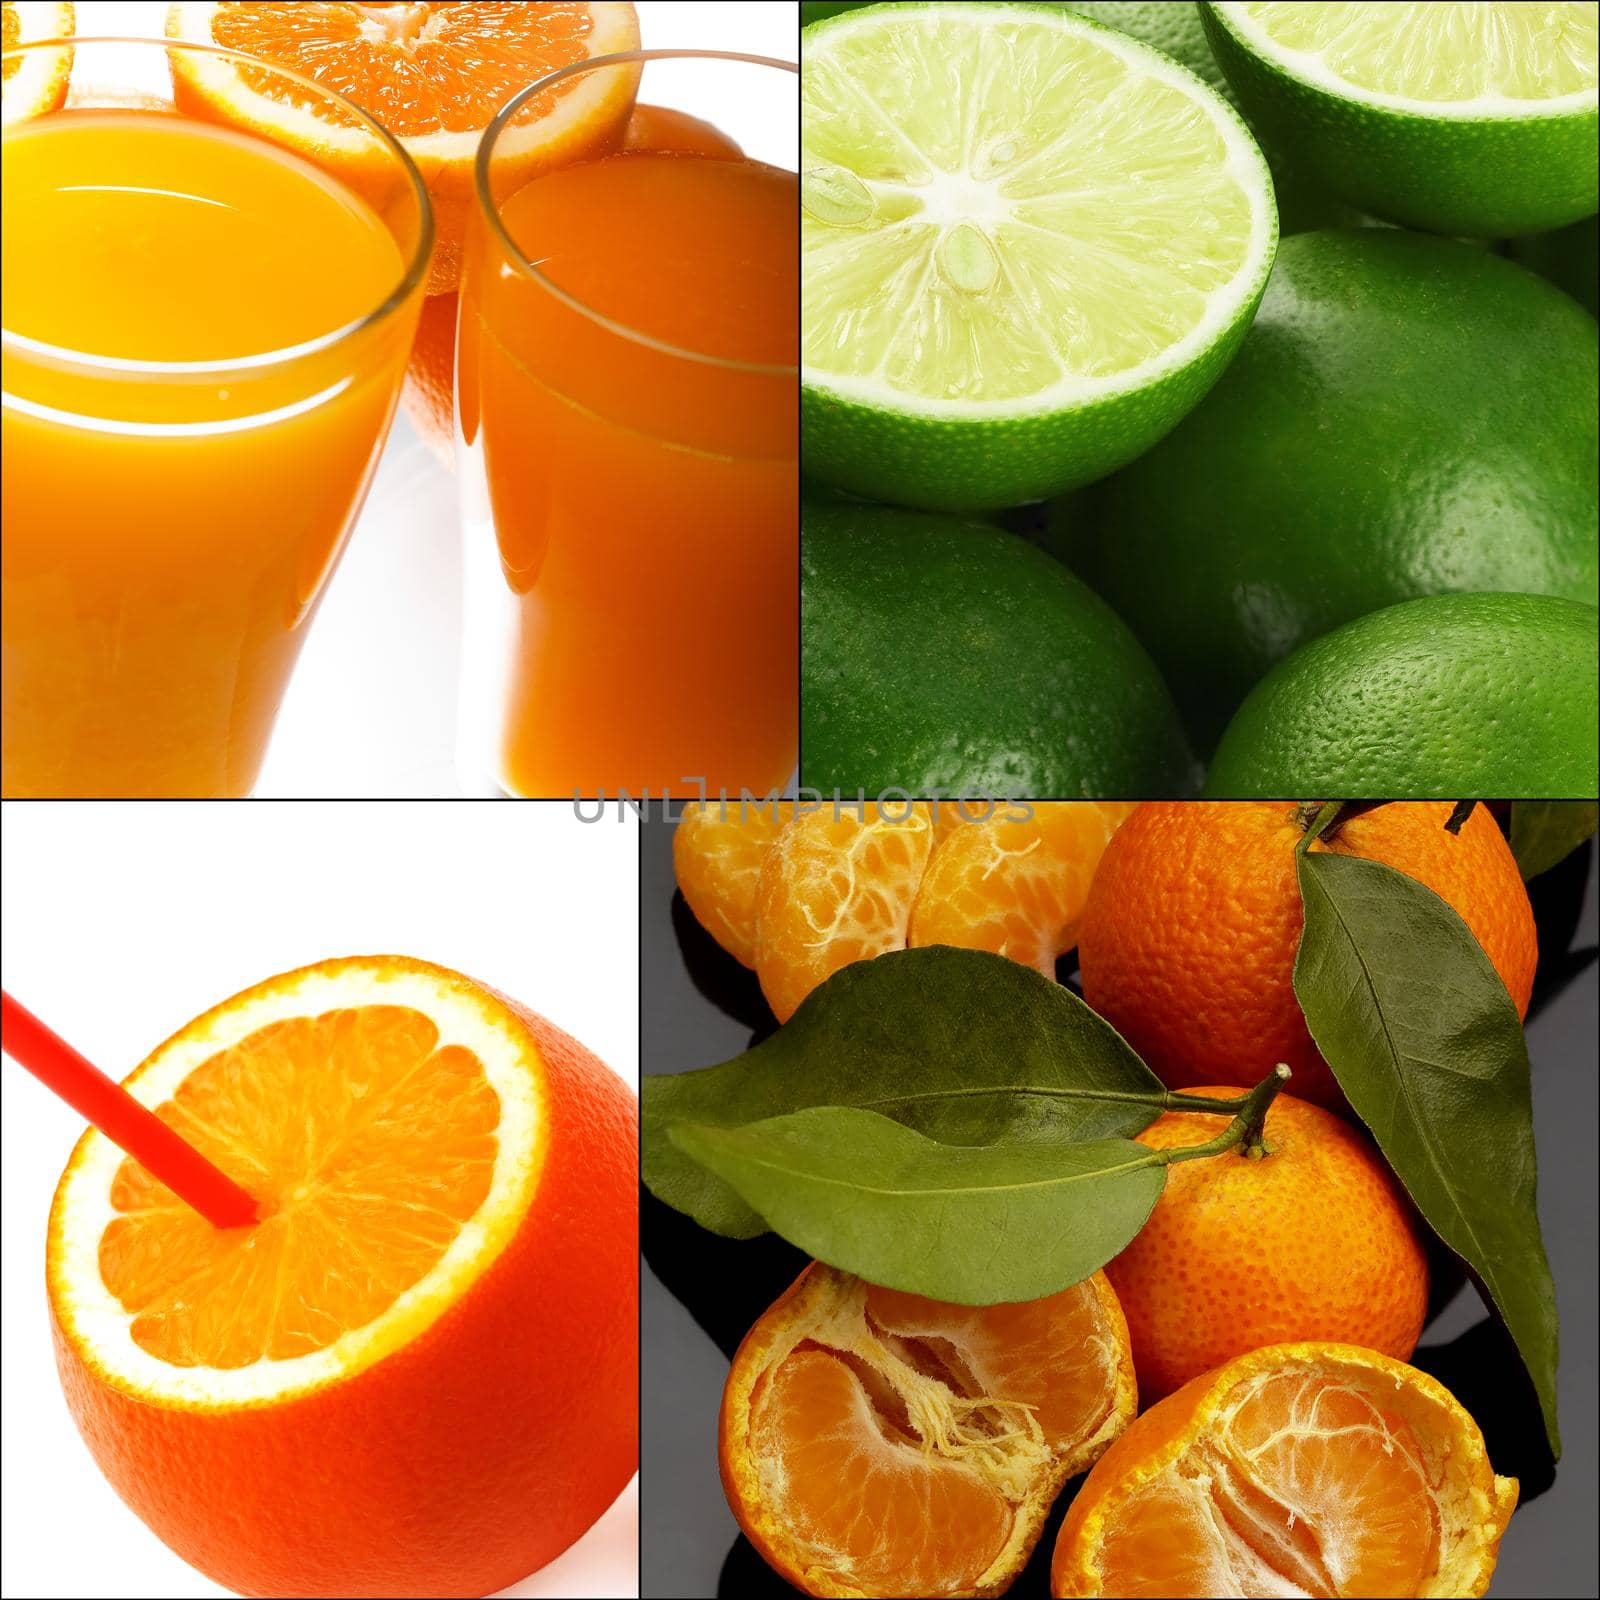 citrus fruits collage by keko64